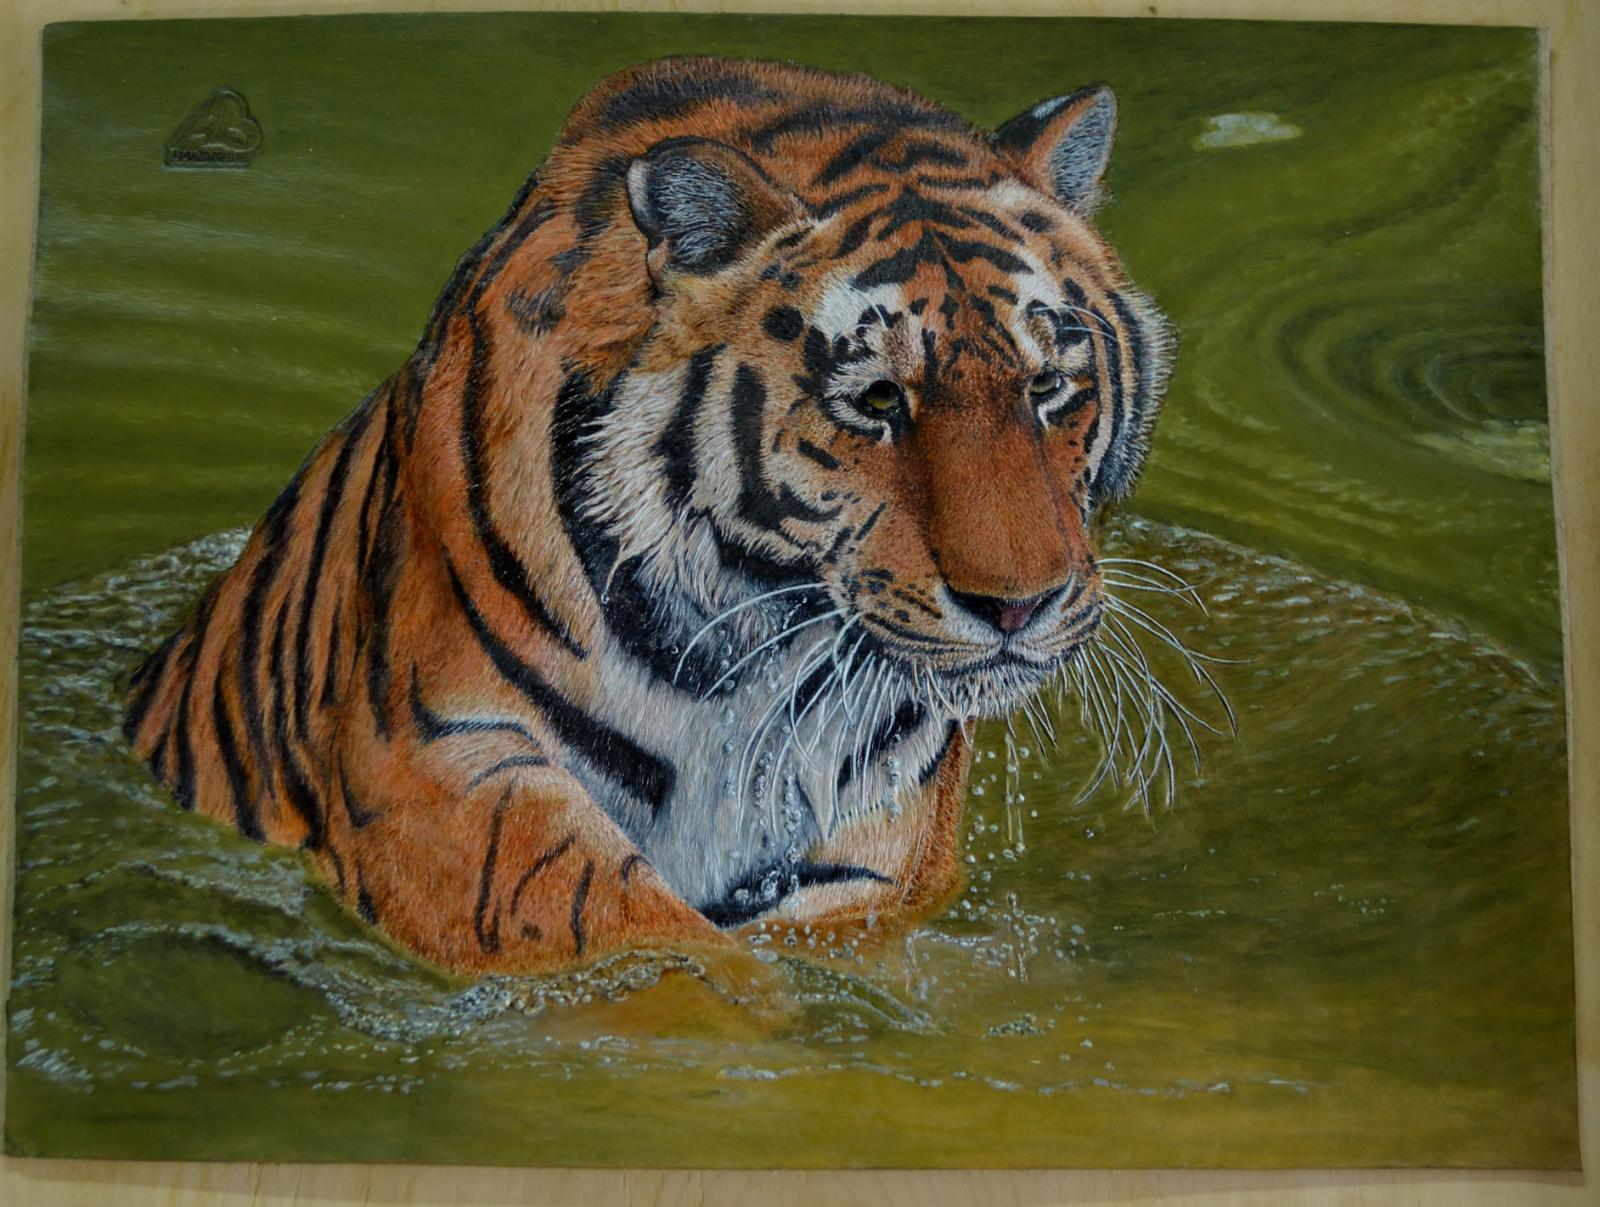 Tiger & water